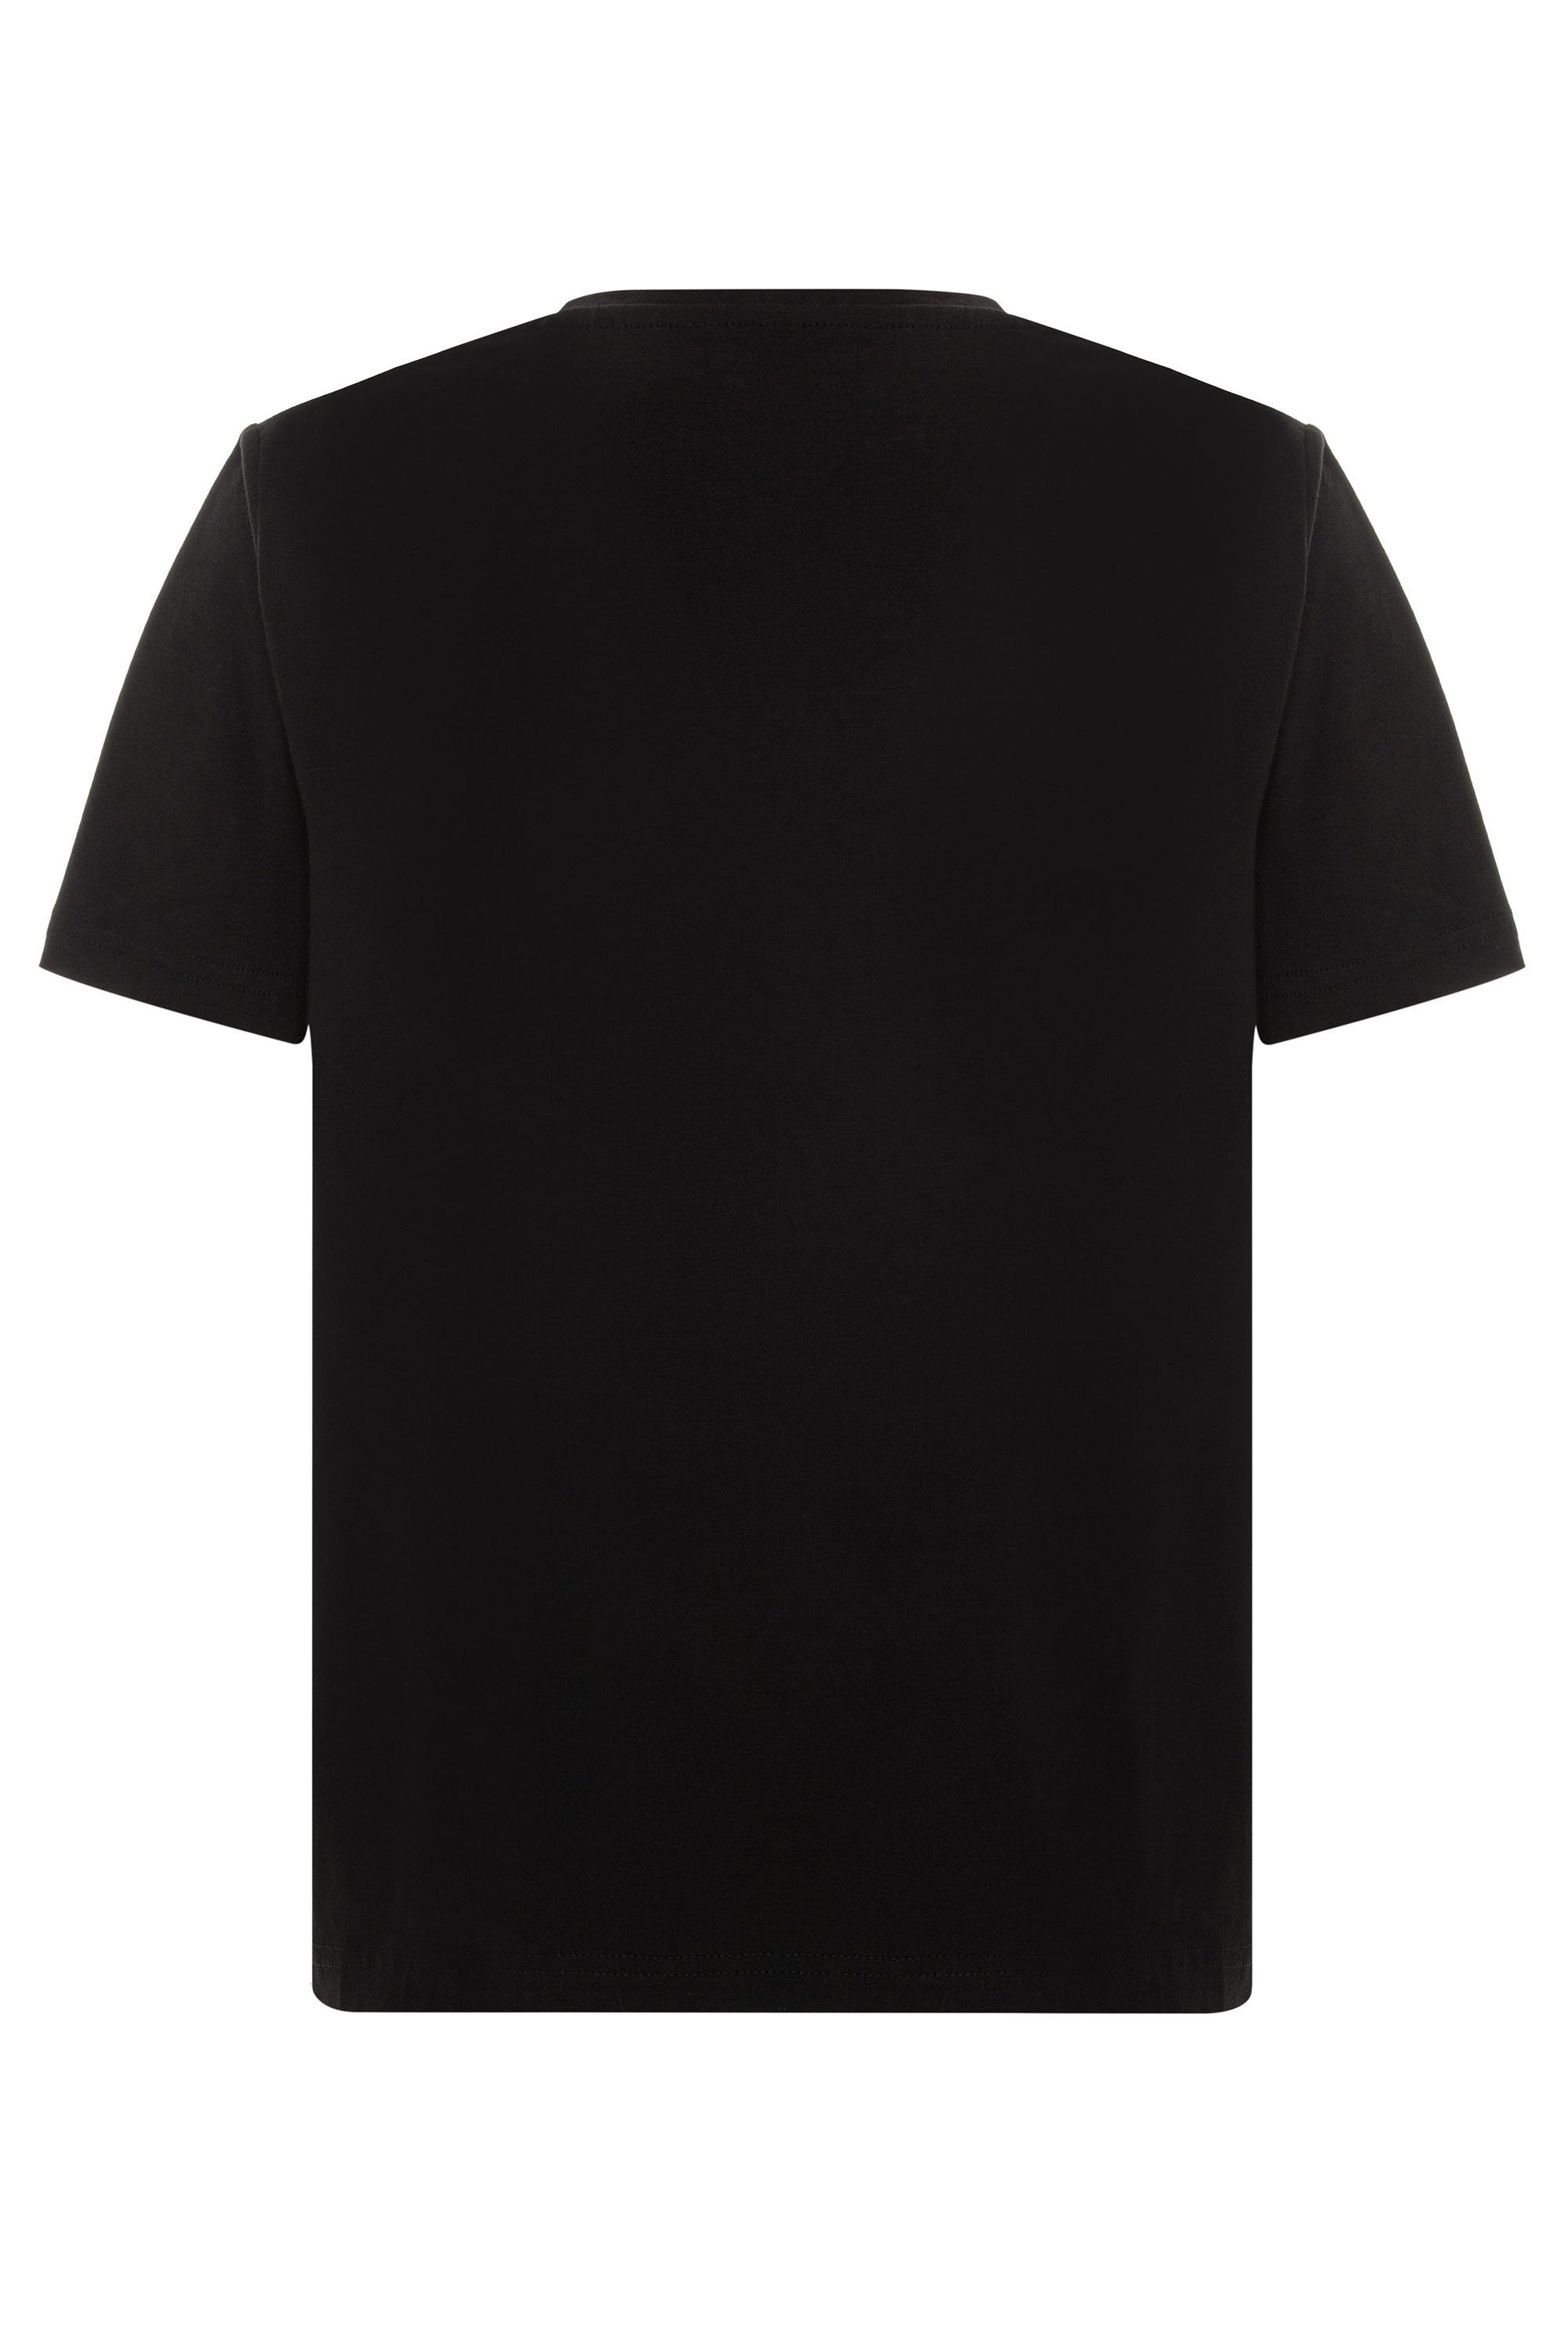 Print & Baxx coolem Cipo schwarz-weiß T-Shirt mit